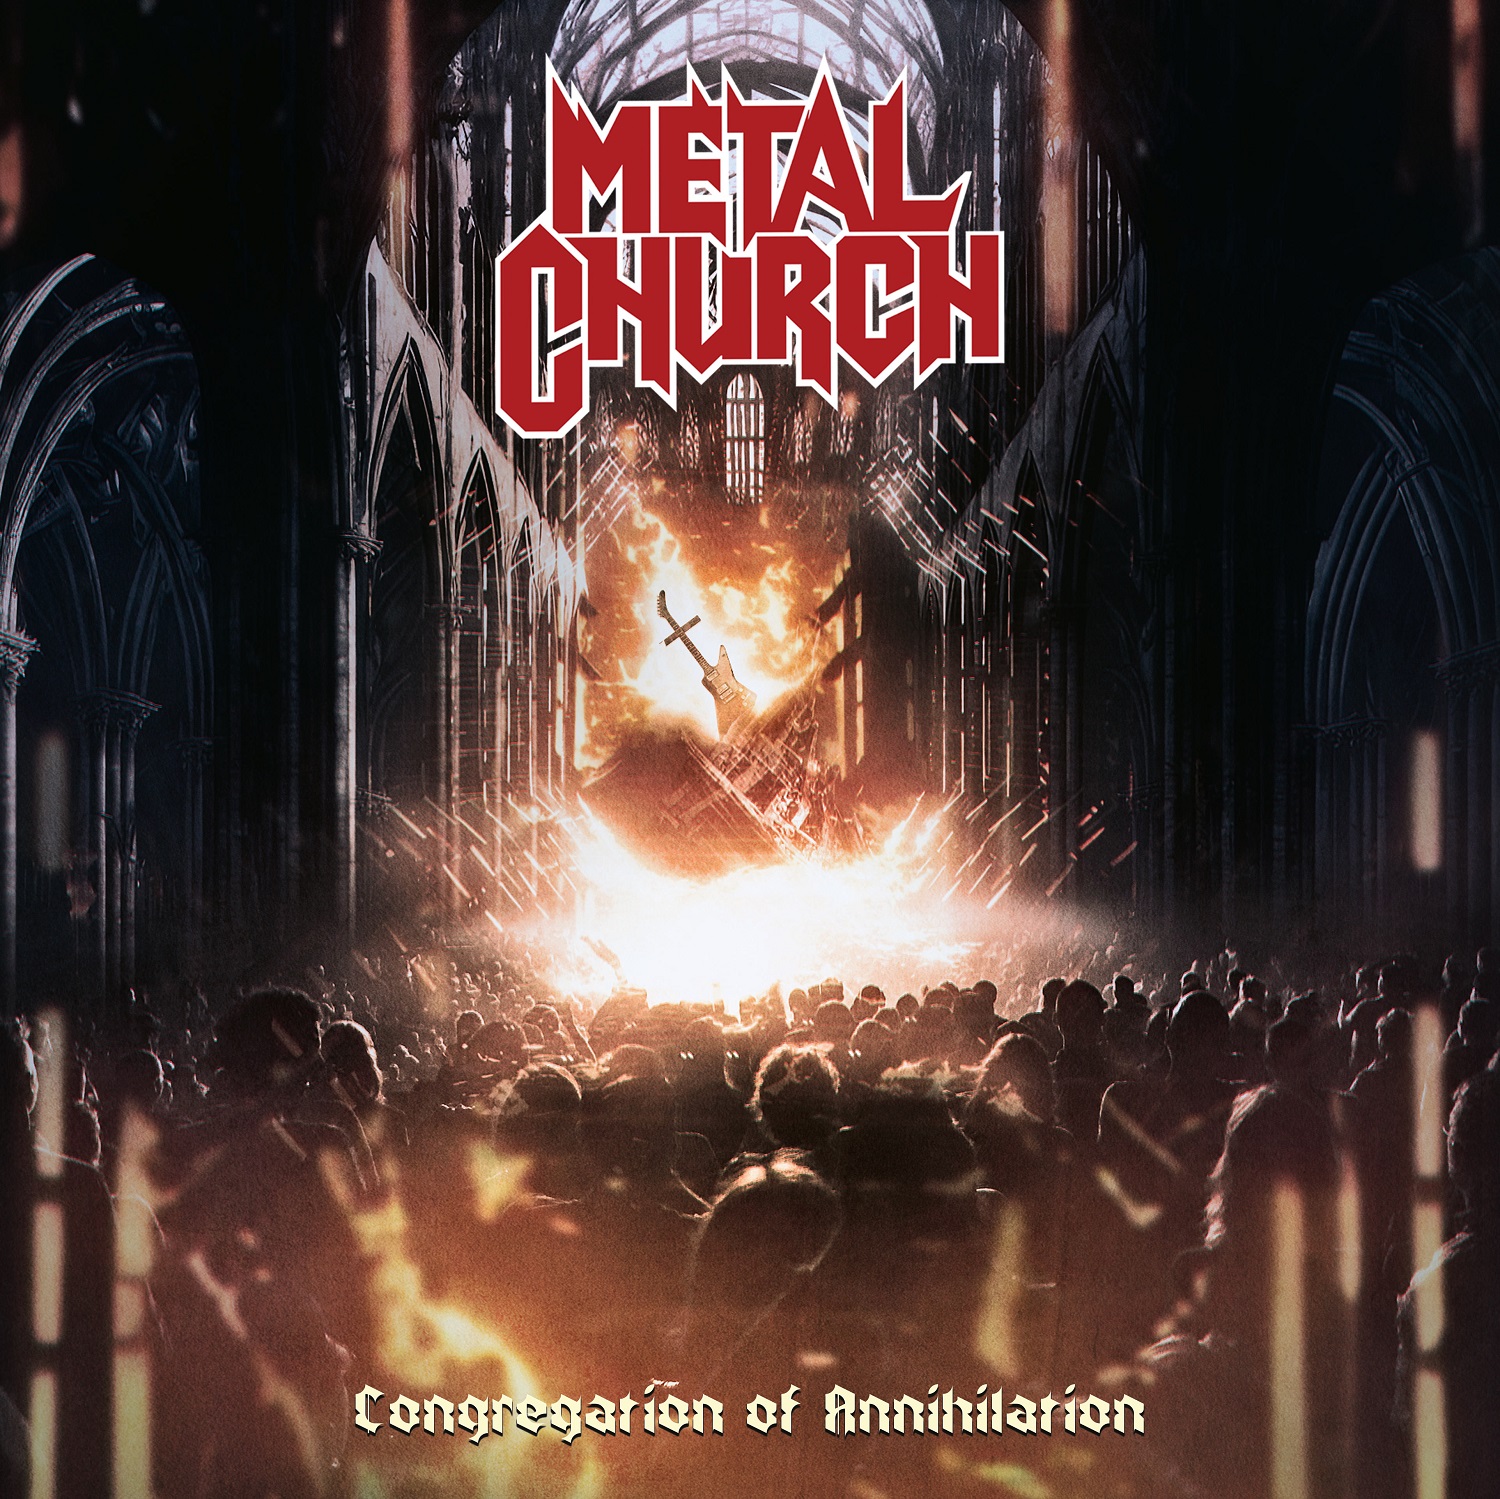 Metal-Church_Congregation-of-Annihilation-01.jpg